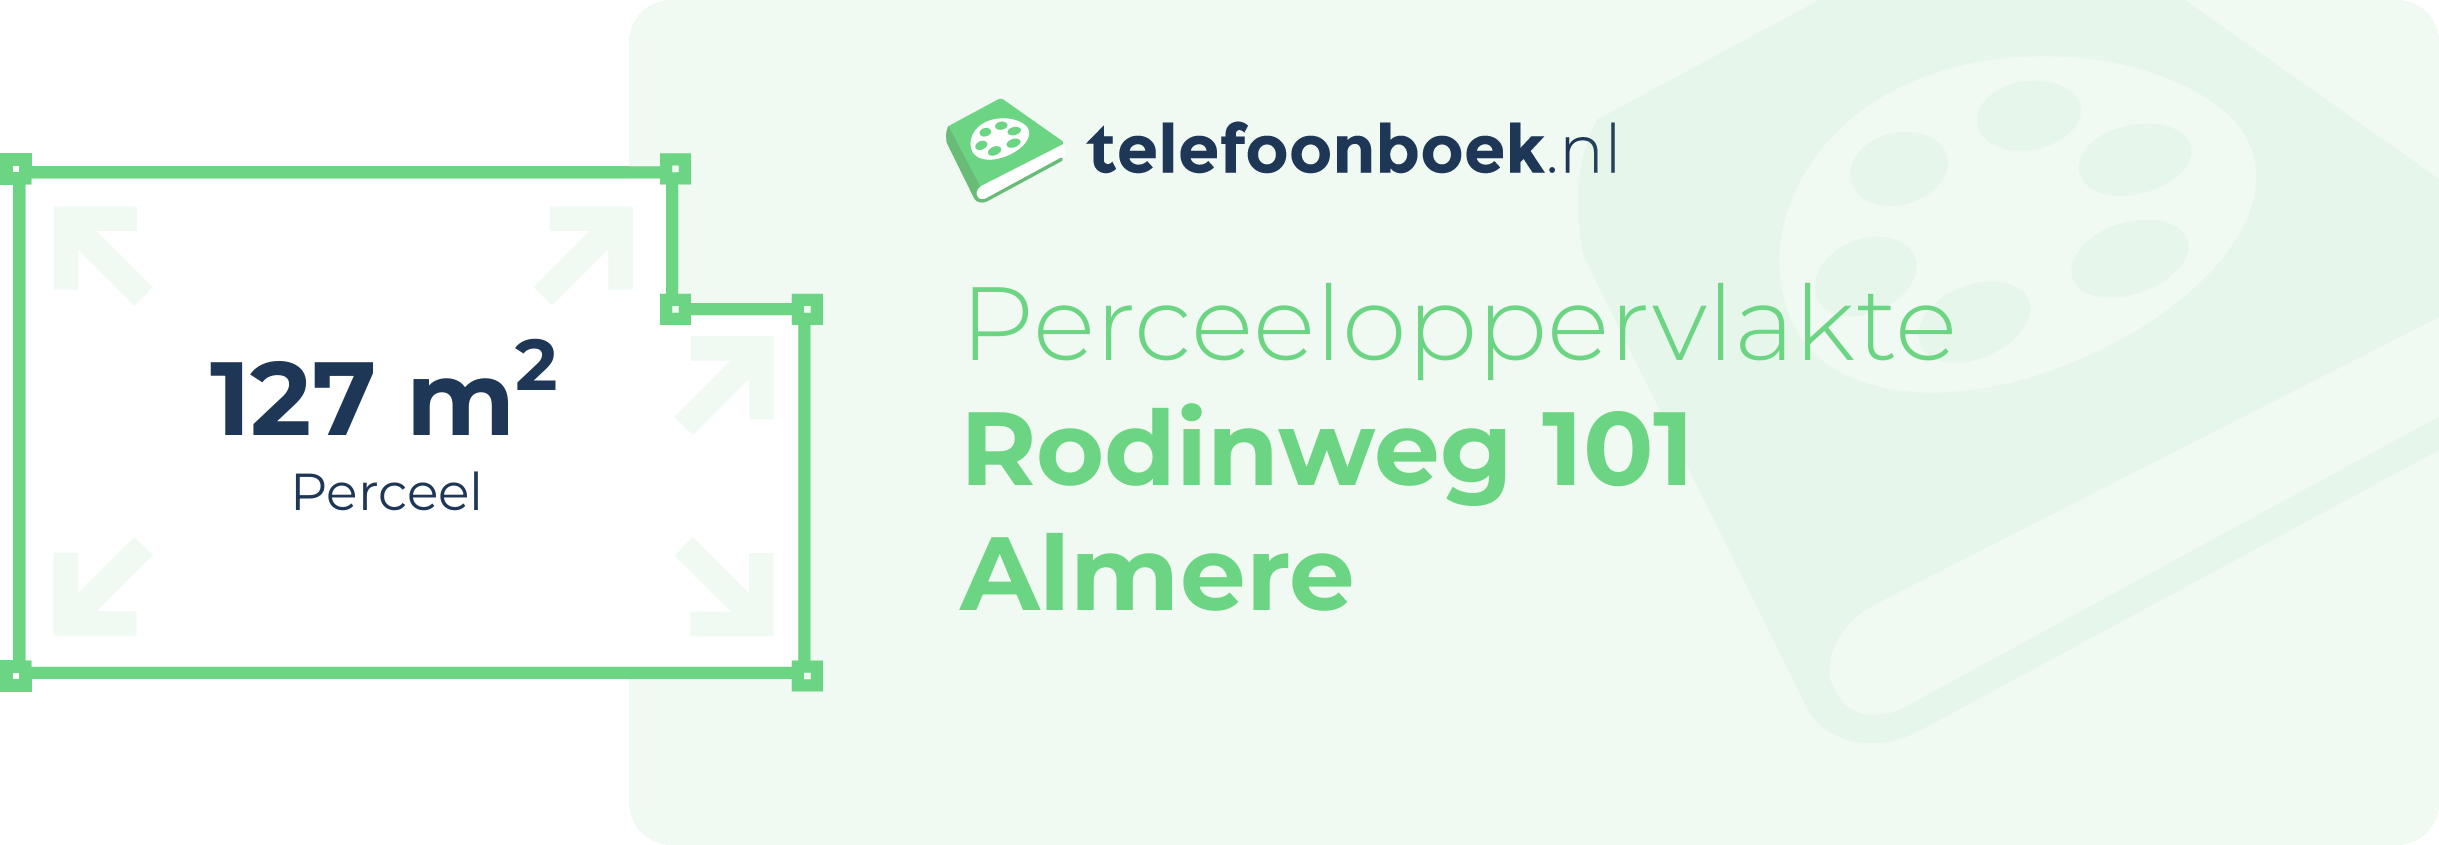 Perceeloppervlakte Rodinweg 101 Almere